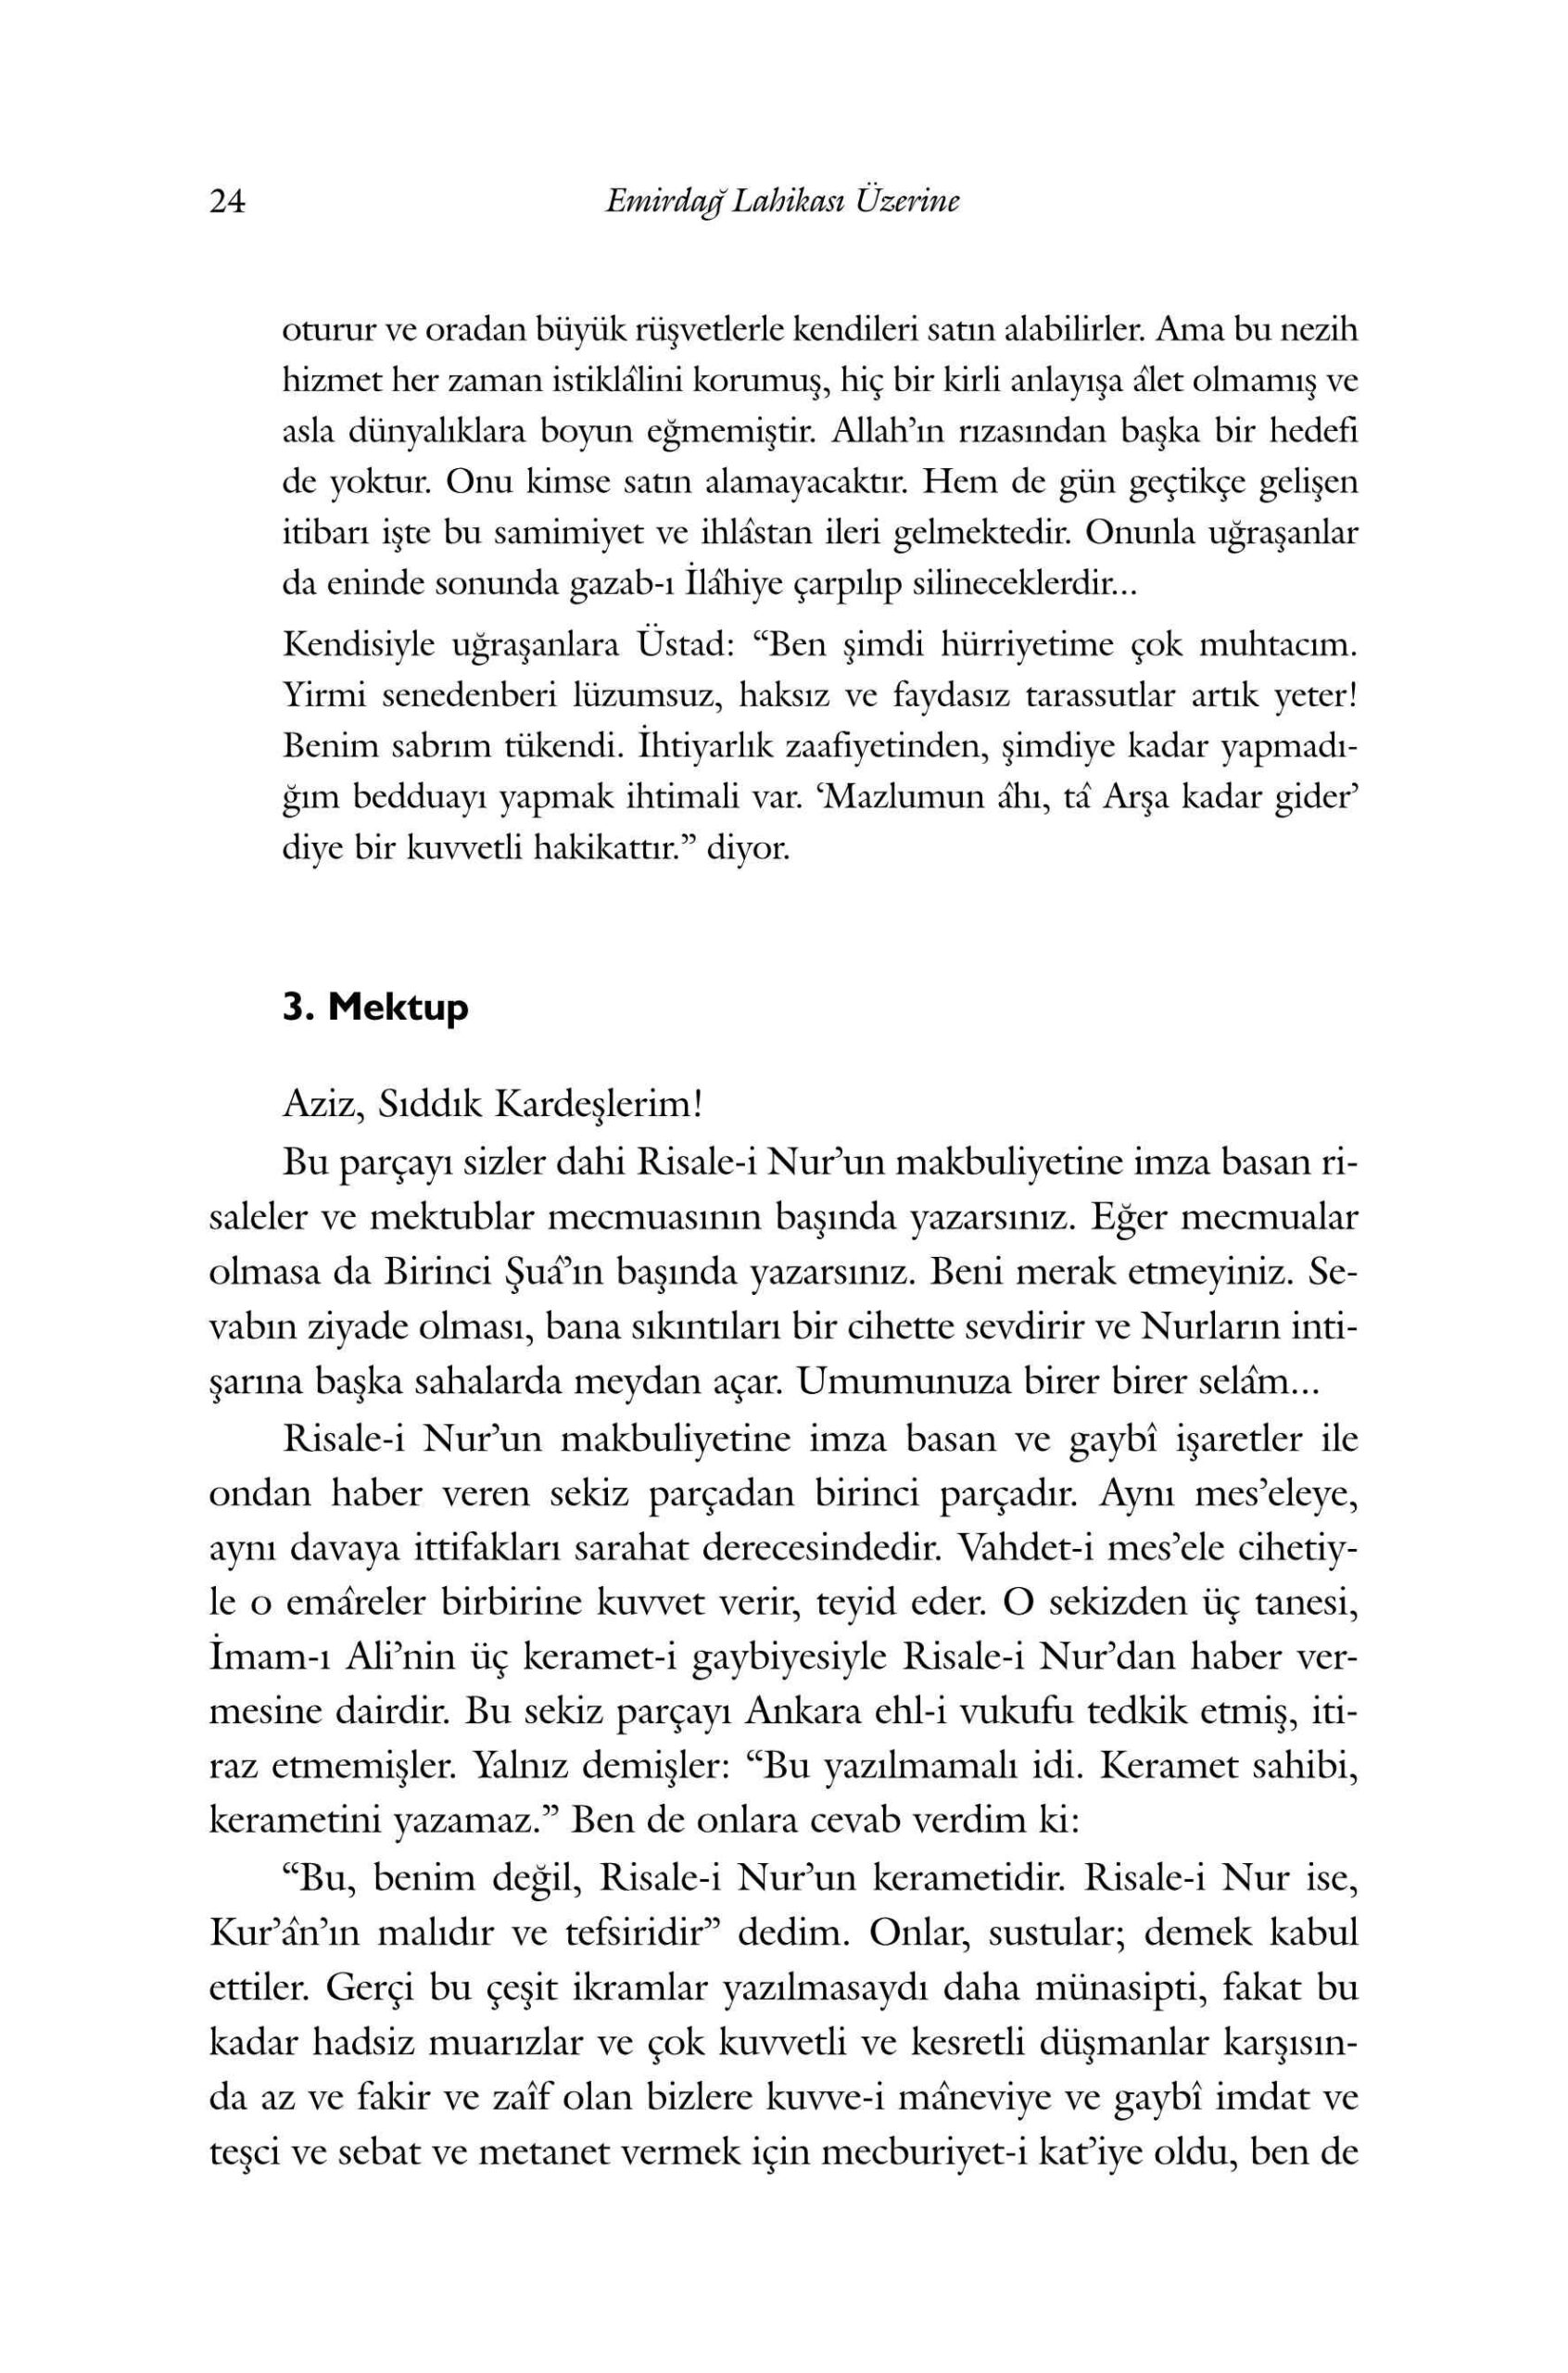 B Said Nursi - Abdullah Aymaz - Emirdag Lahikasi Uzerine-1 - SahdamarY.pdf, 501-Sayfa 